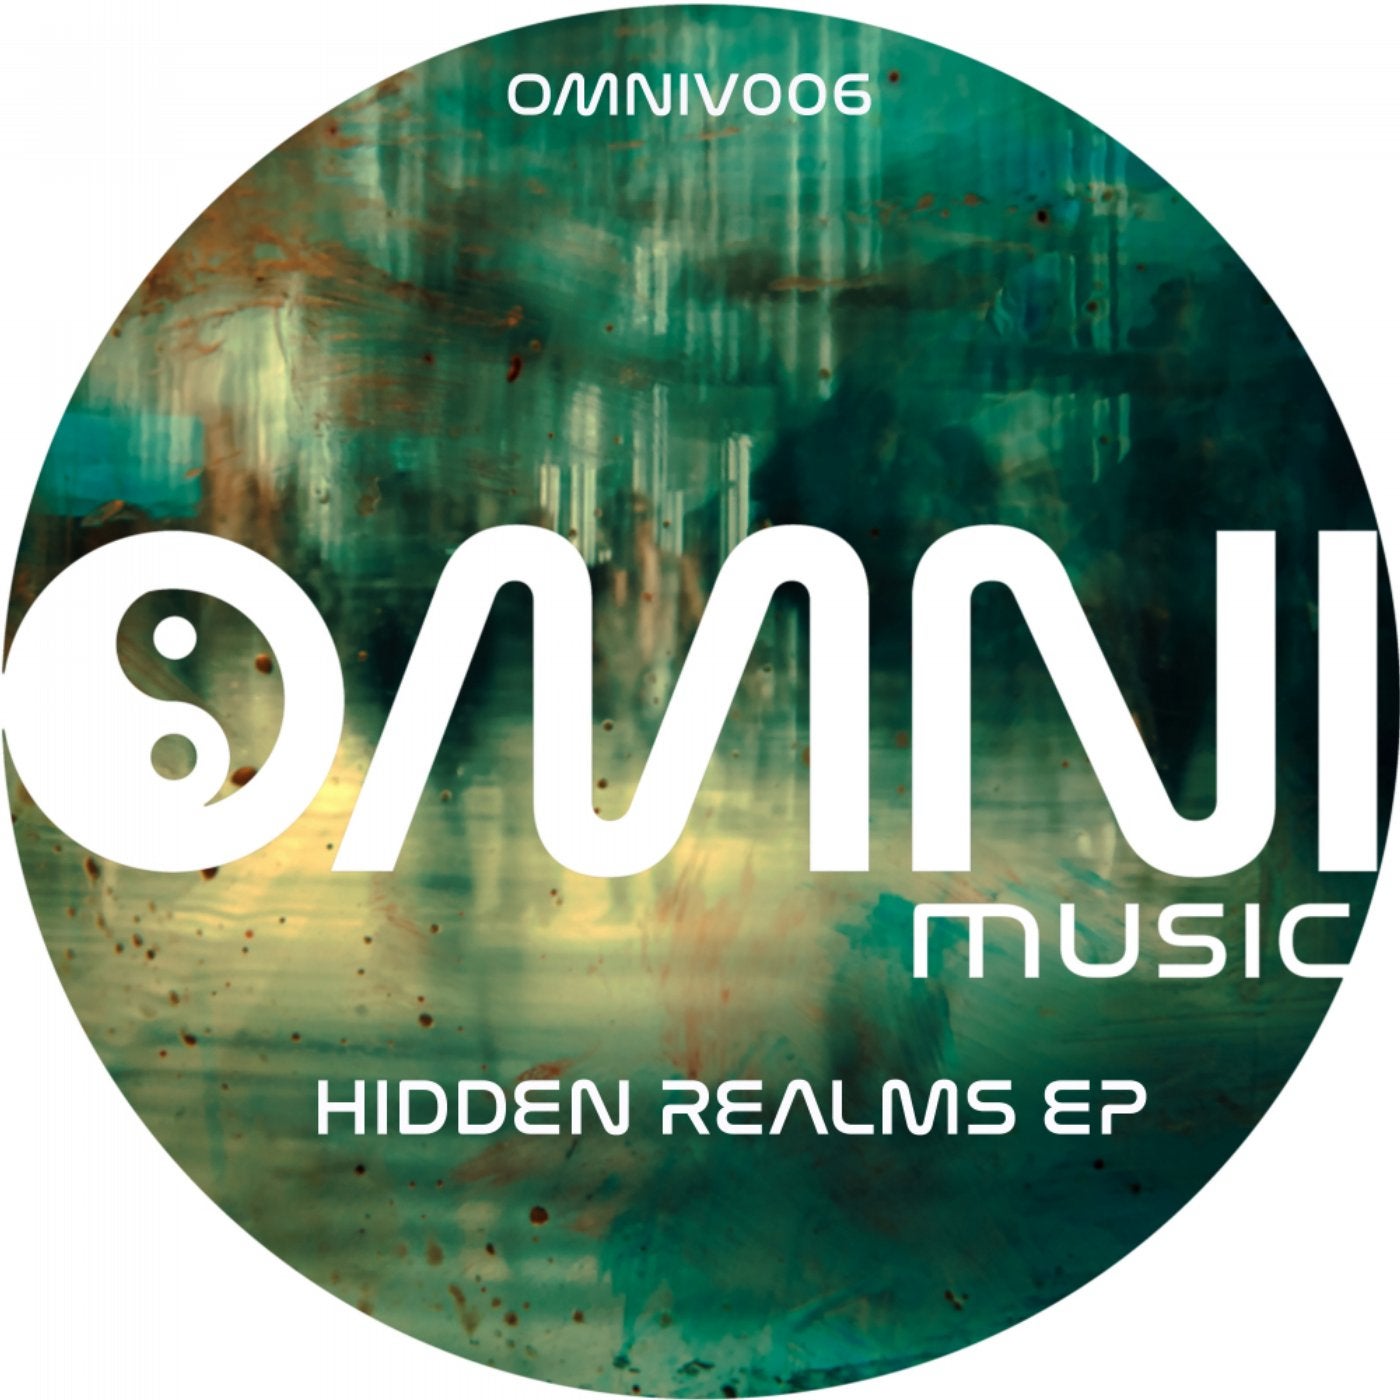 Hidden Realms EP